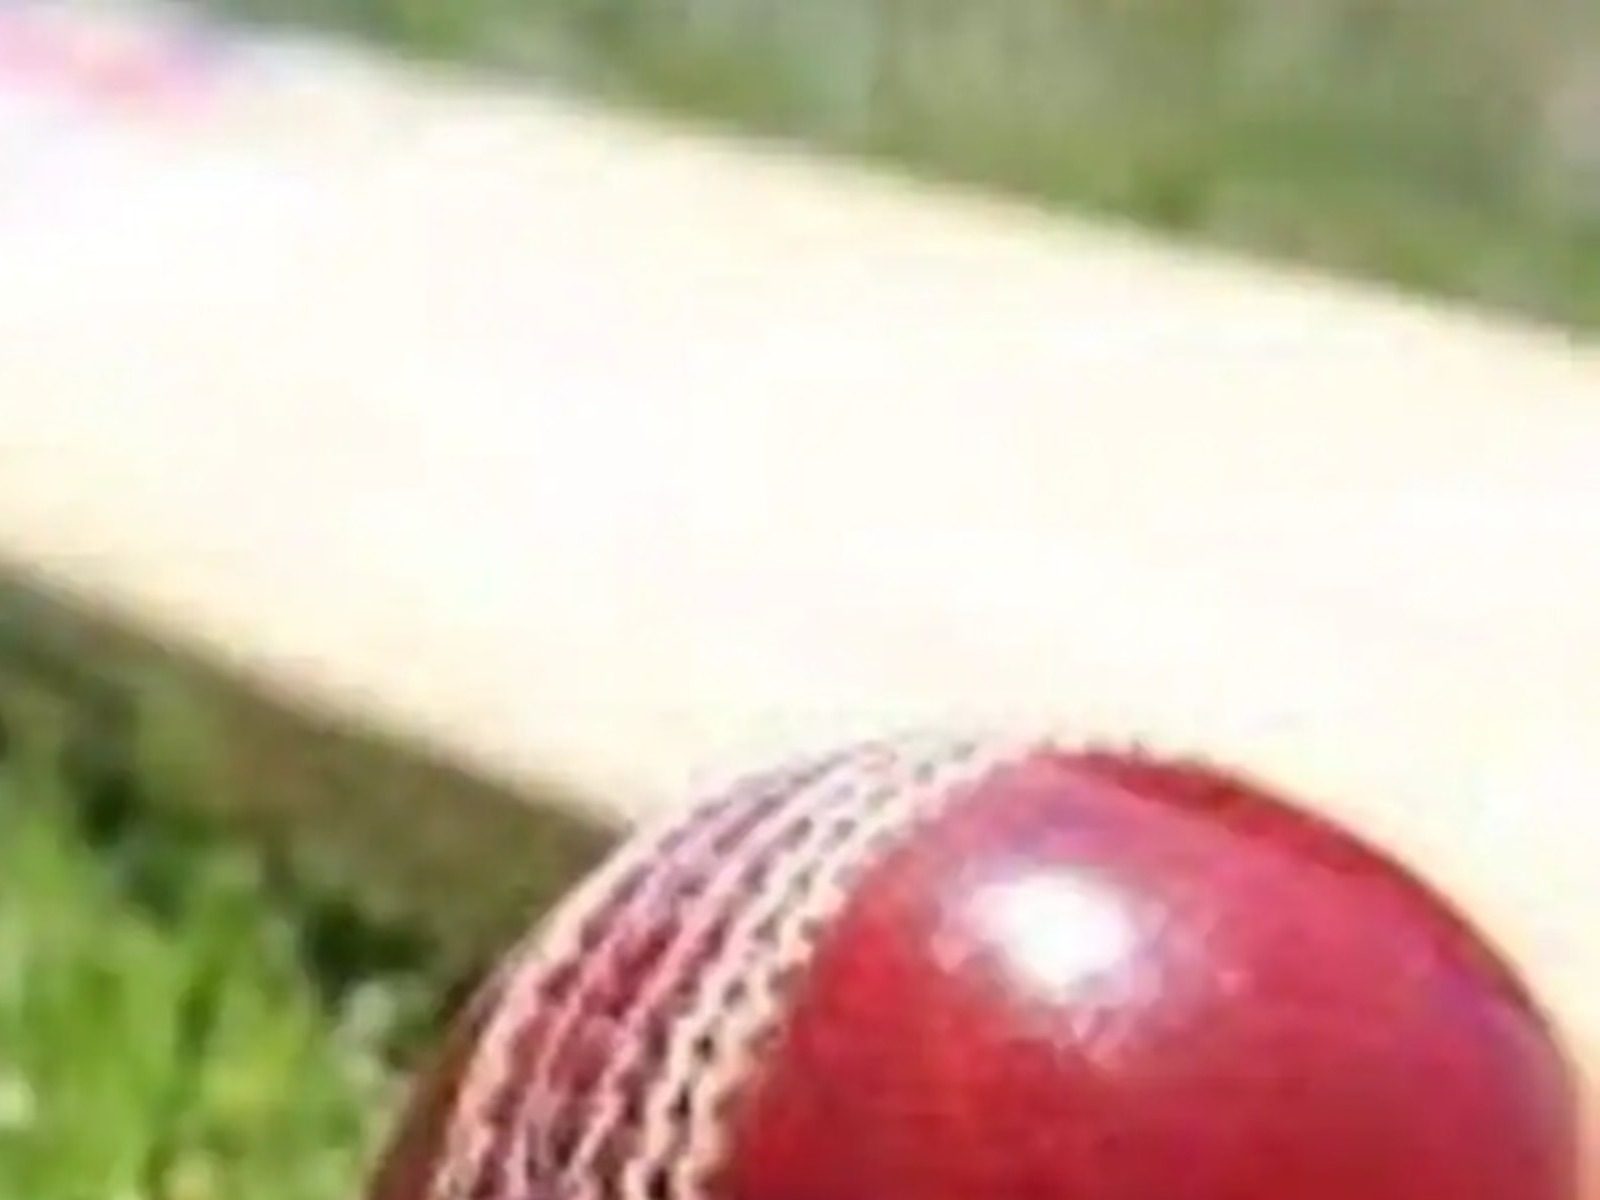 AS-W vs BH-W: Check our Dream11 Prediction, Fantasy Cricket Tips